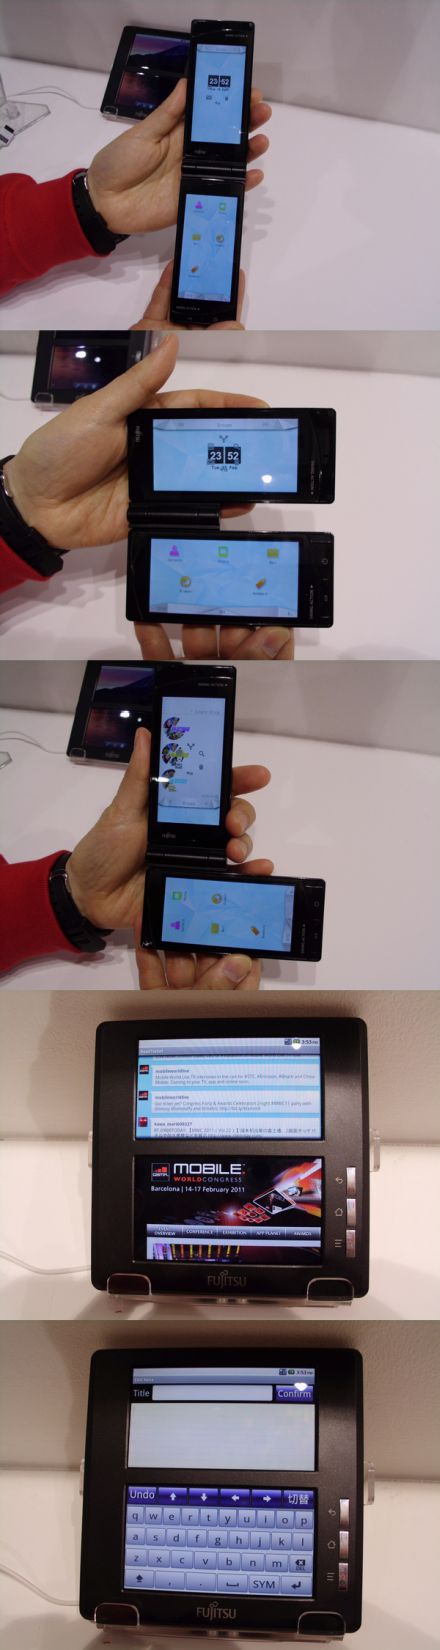 Kétkijelzős Symbian mobil a Fujitsutól